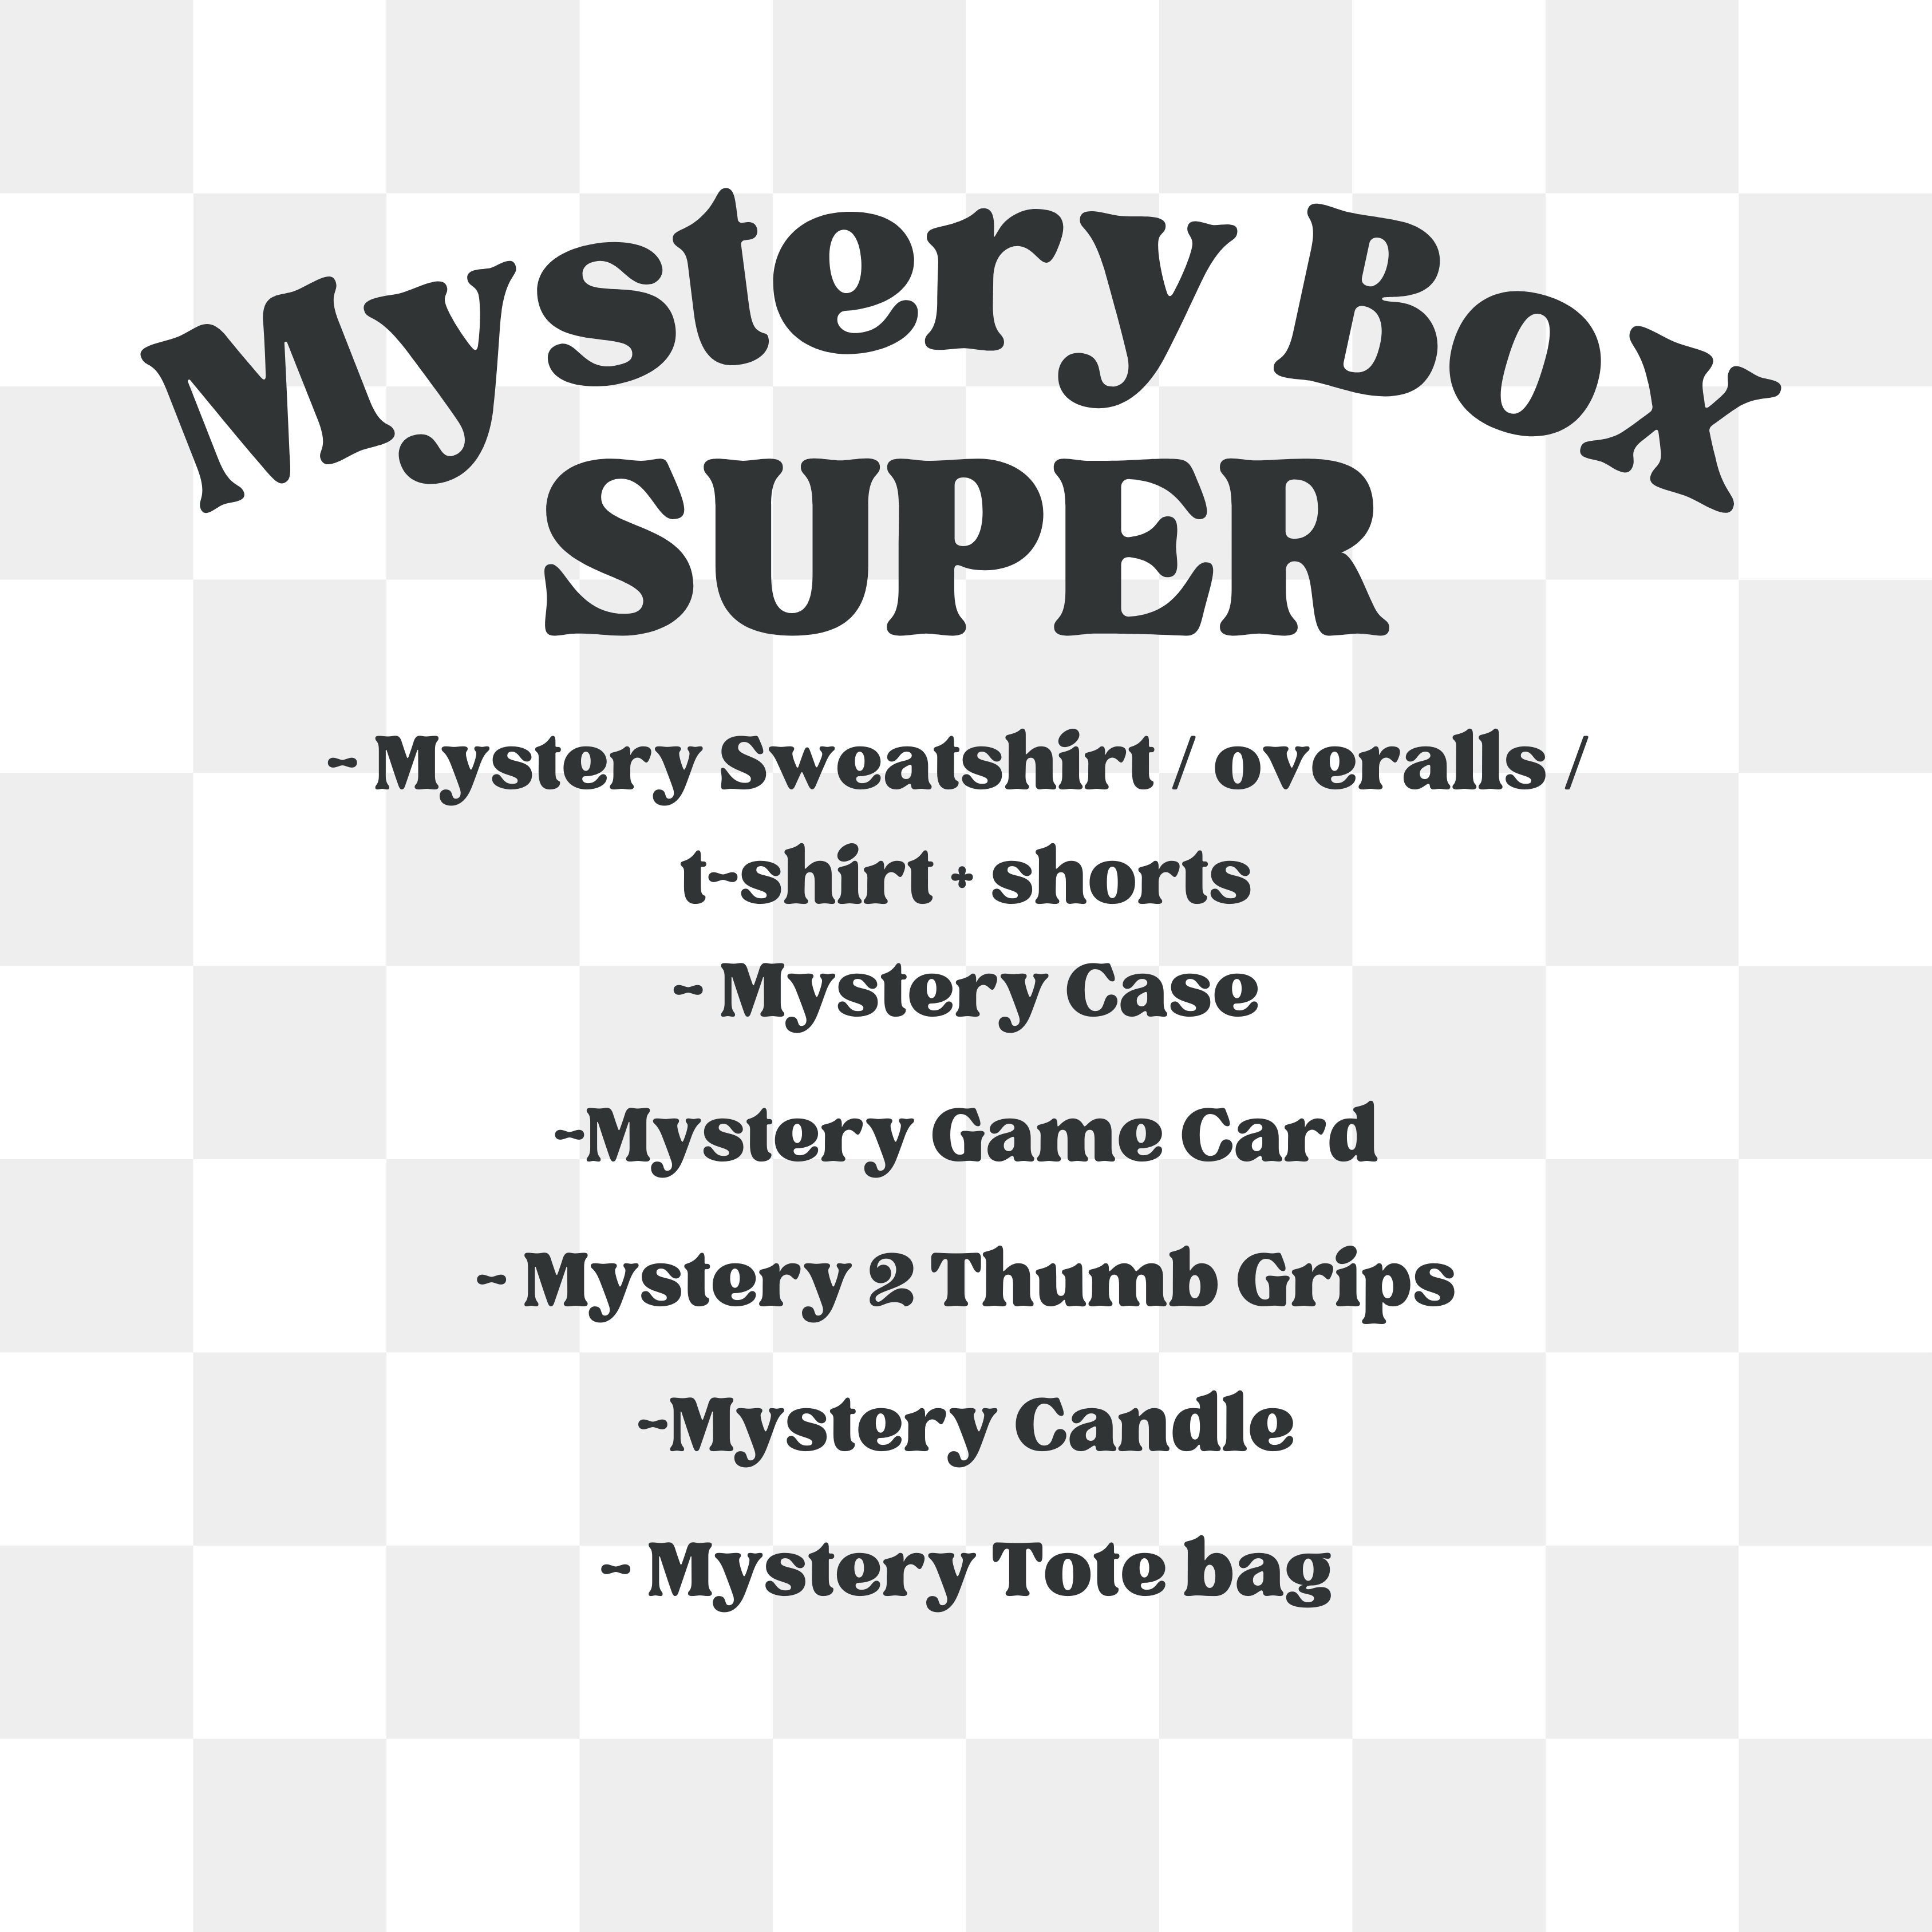 Mystery Box Super